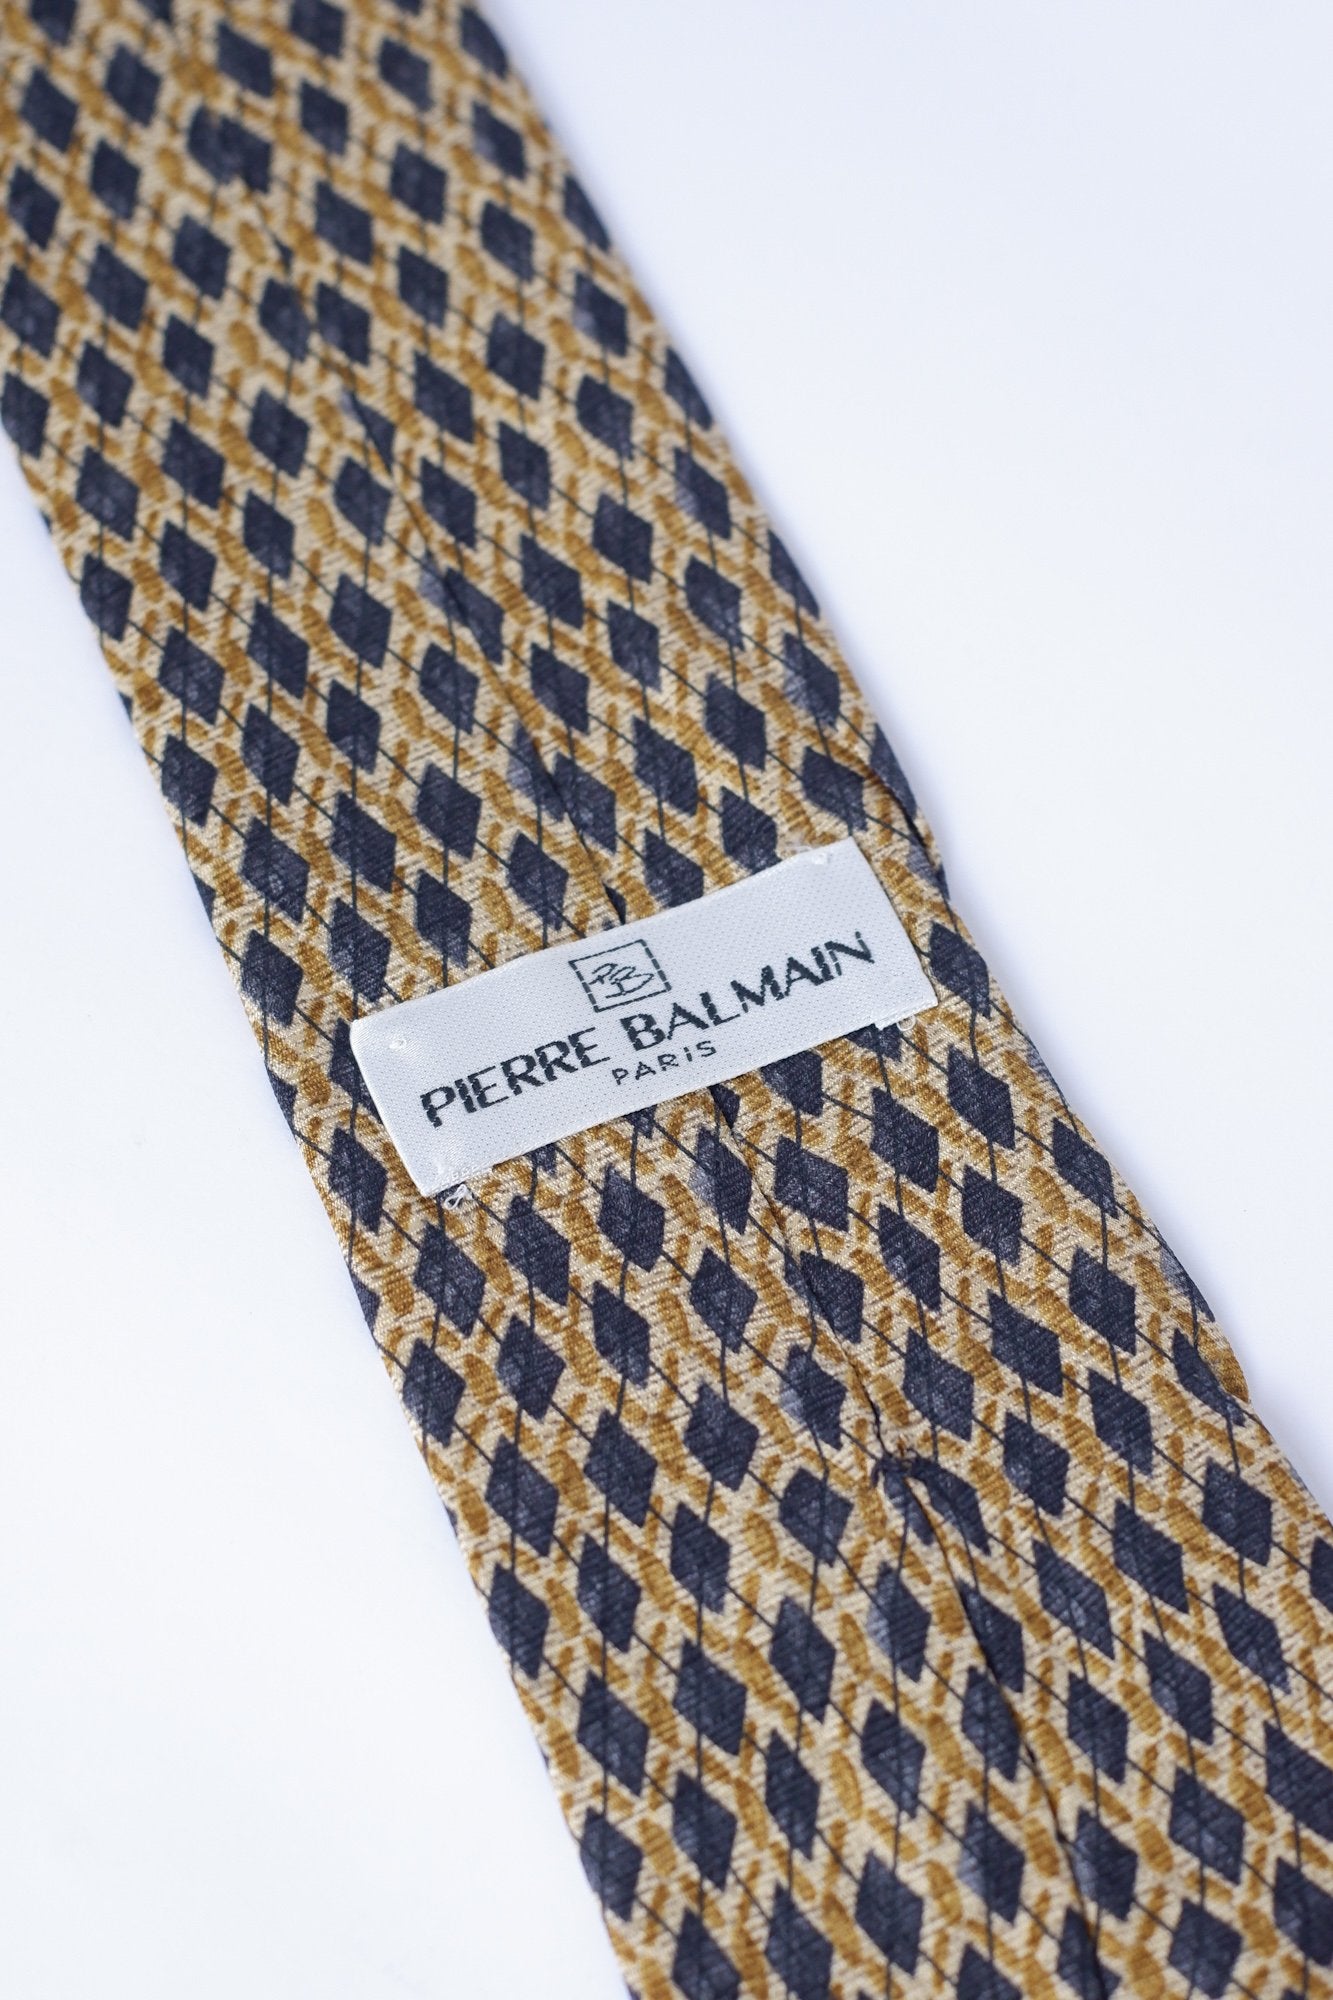 Pierre Balmain Yellow and Navy Diamonds Printed Necktie